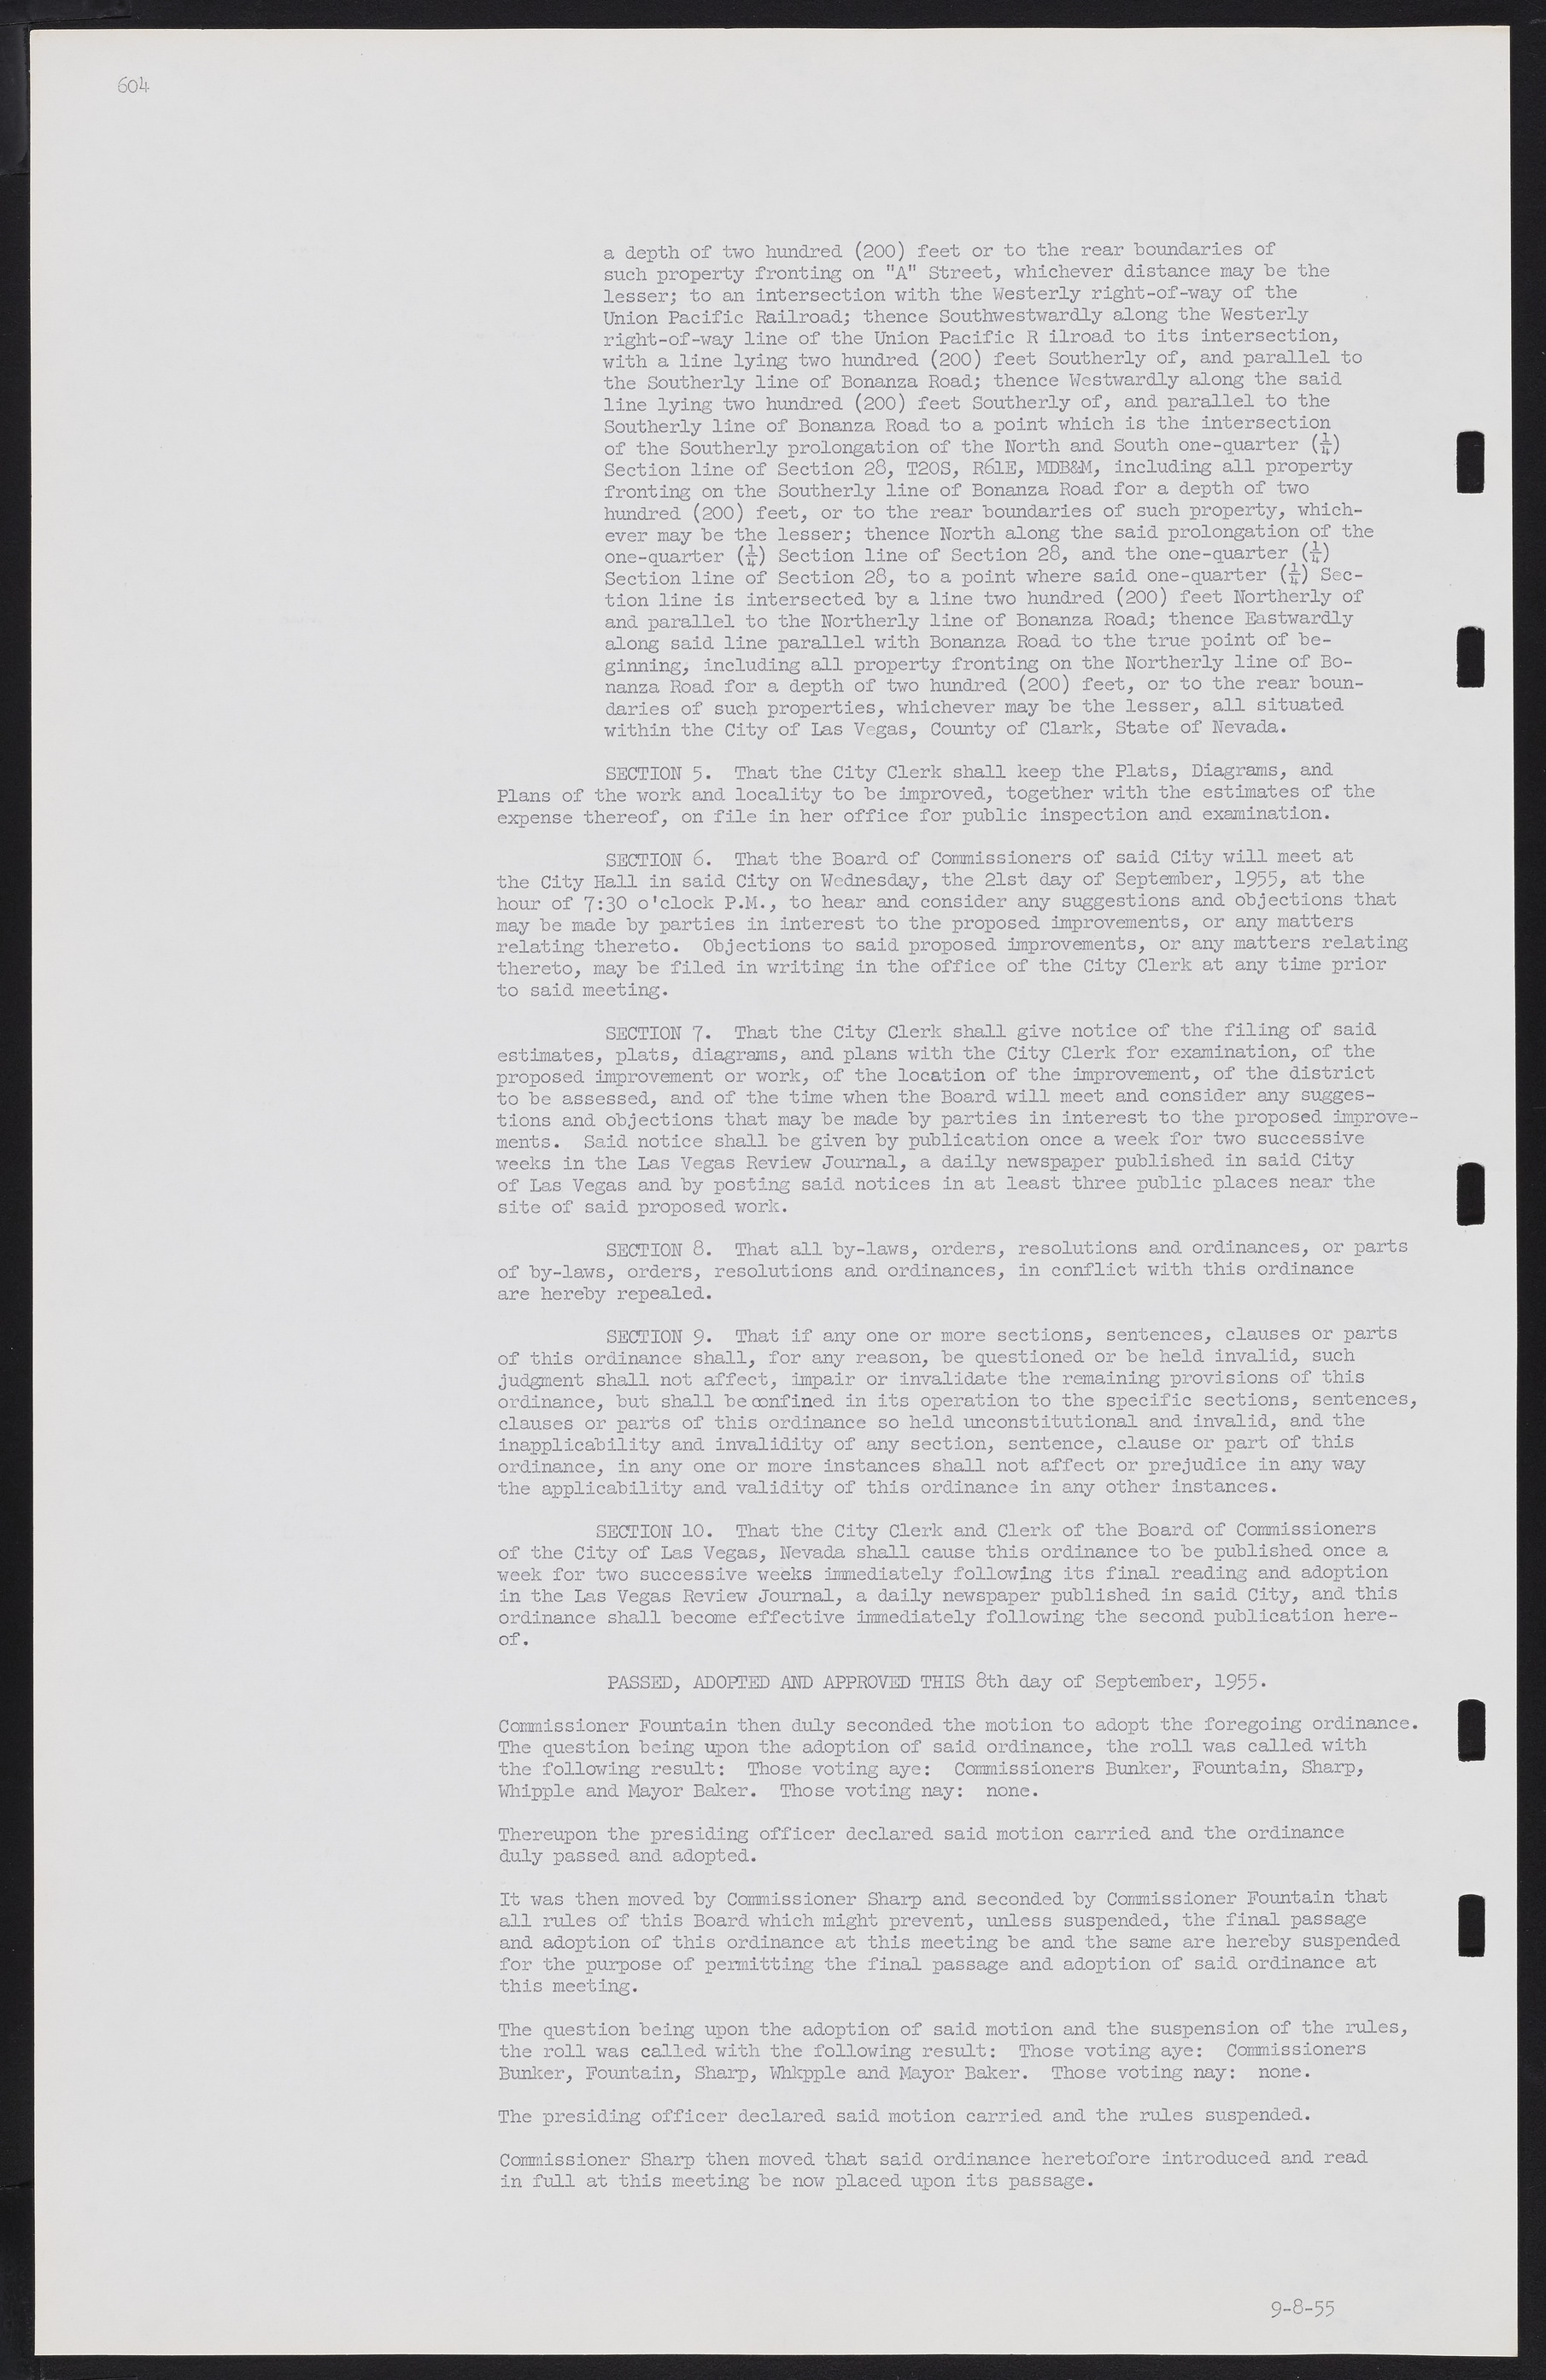 Las Vegas City Commission Minutes, February 17, 1954 to September 21, 1955, lvc000009-610